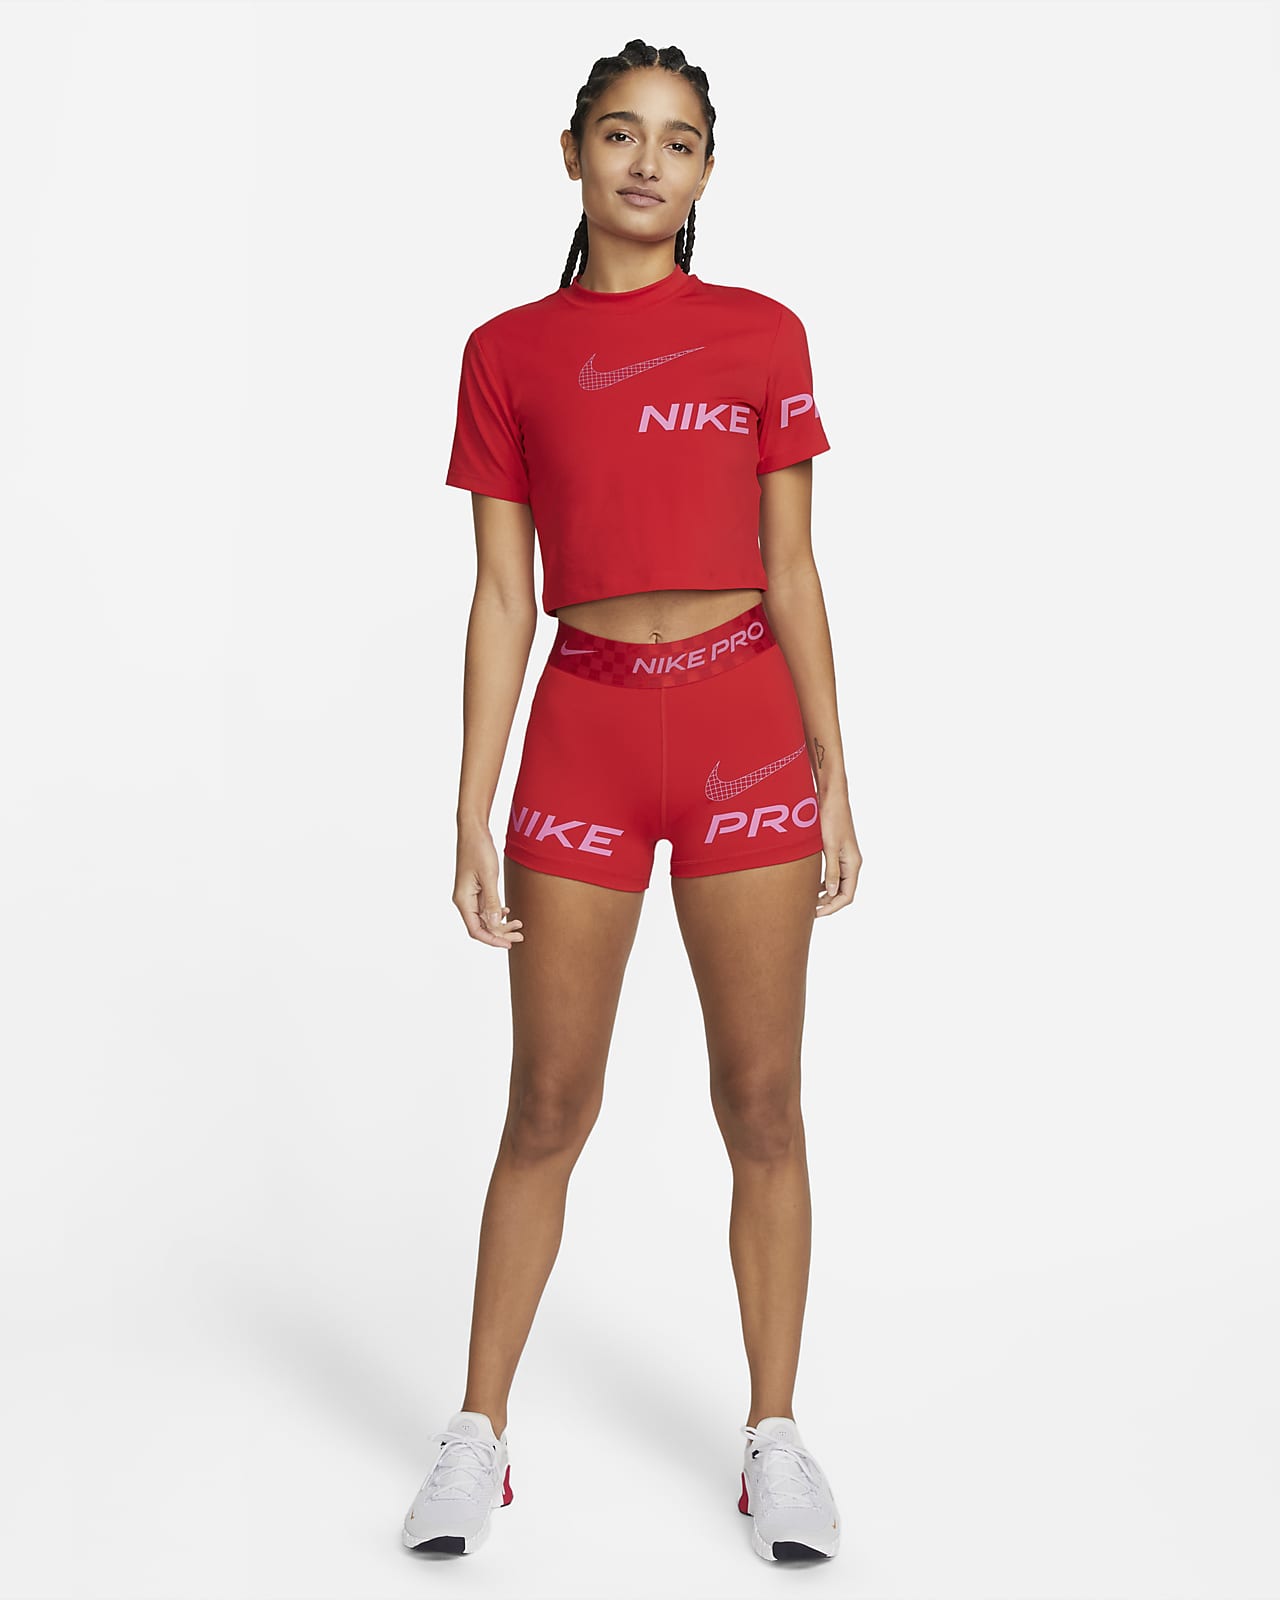 Nike Pro Shorts Womens Large Pink Yellow Spandex Dri Fit Gym